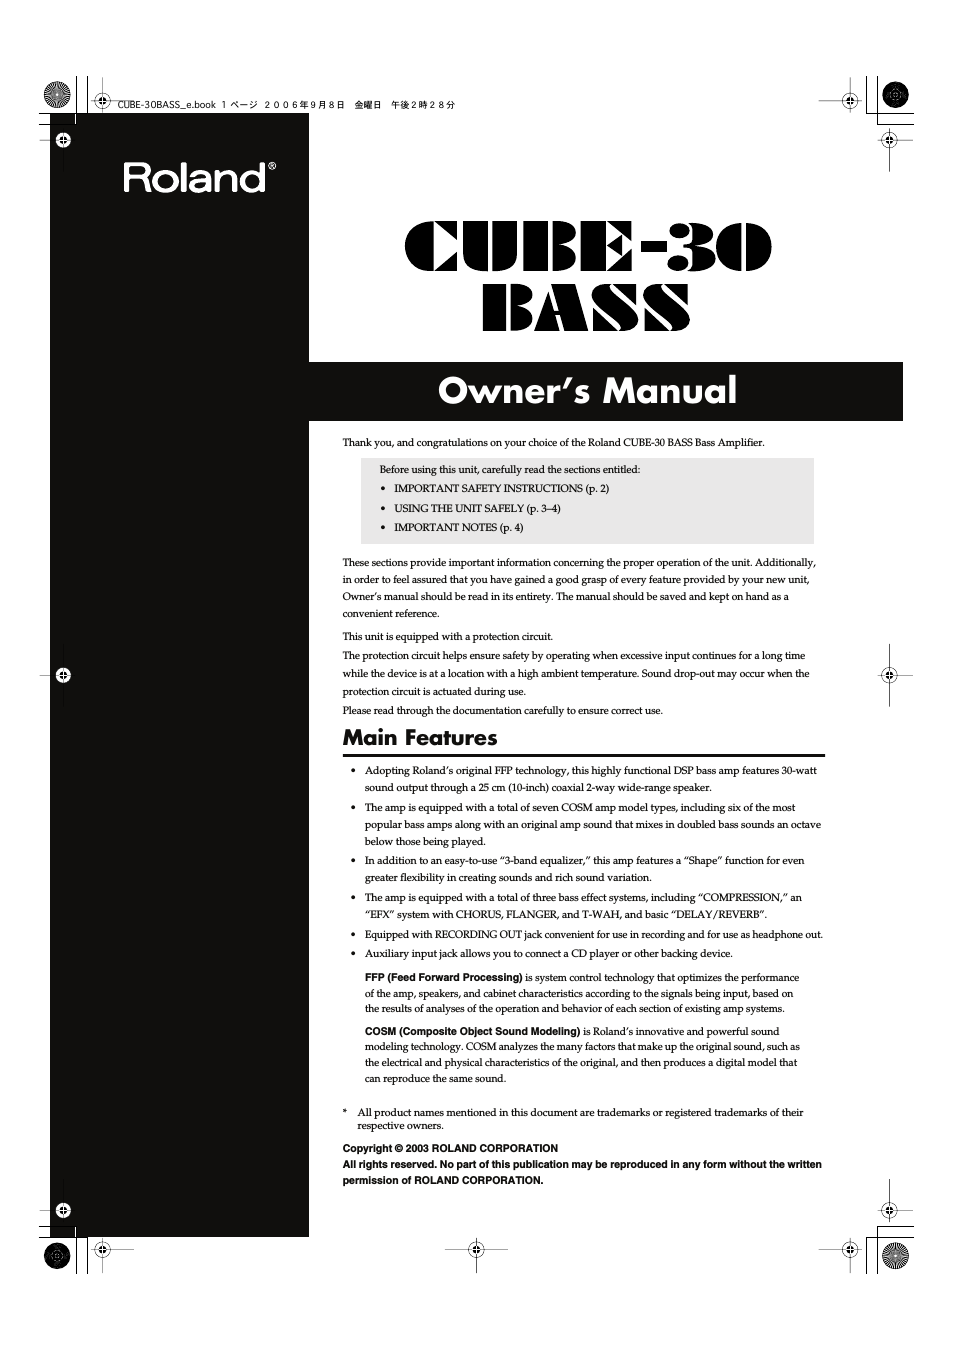 Cube-30 Bass